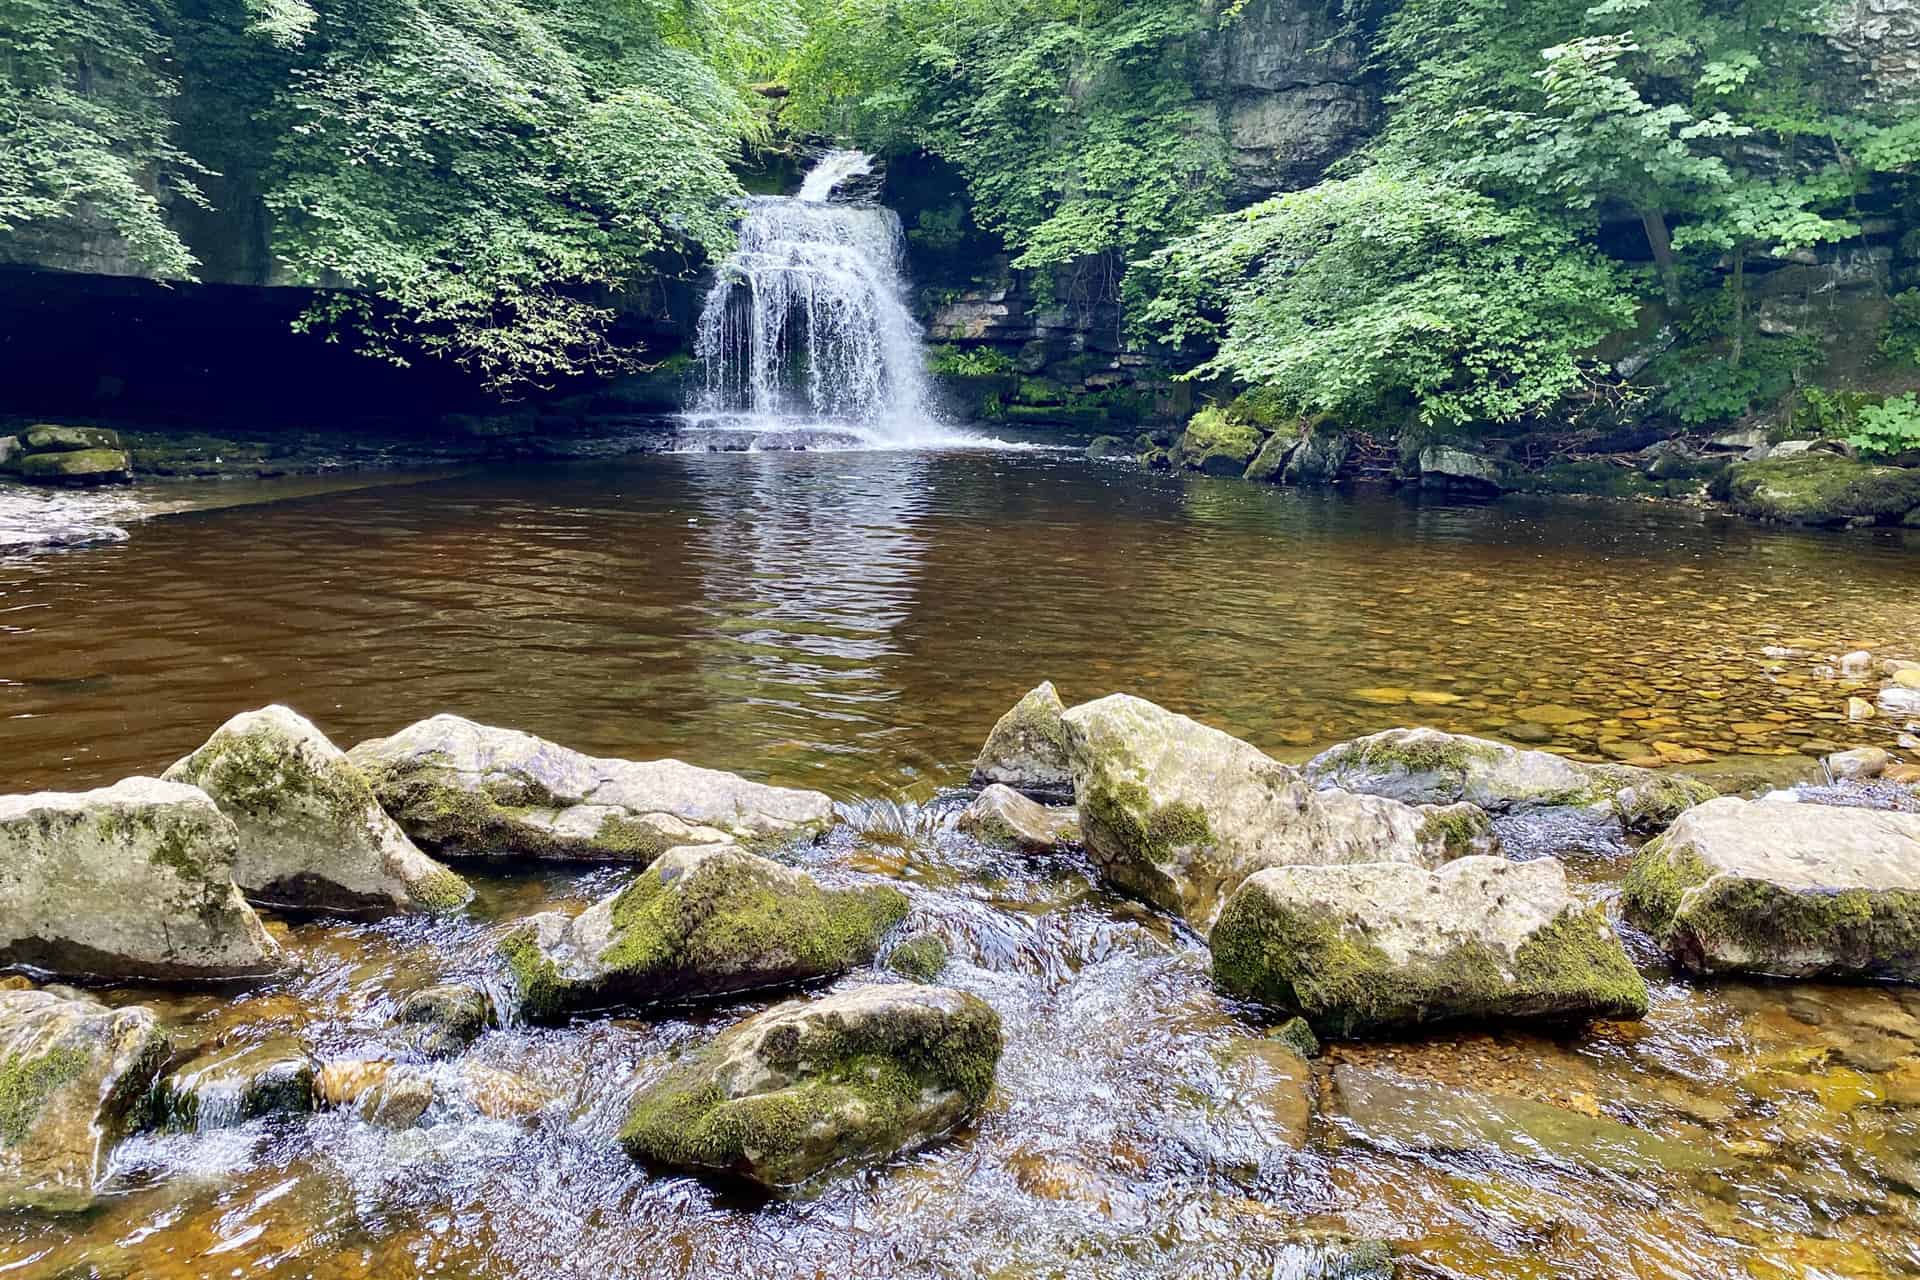 The popular West Burton waterfall known as Cauldron Falls.